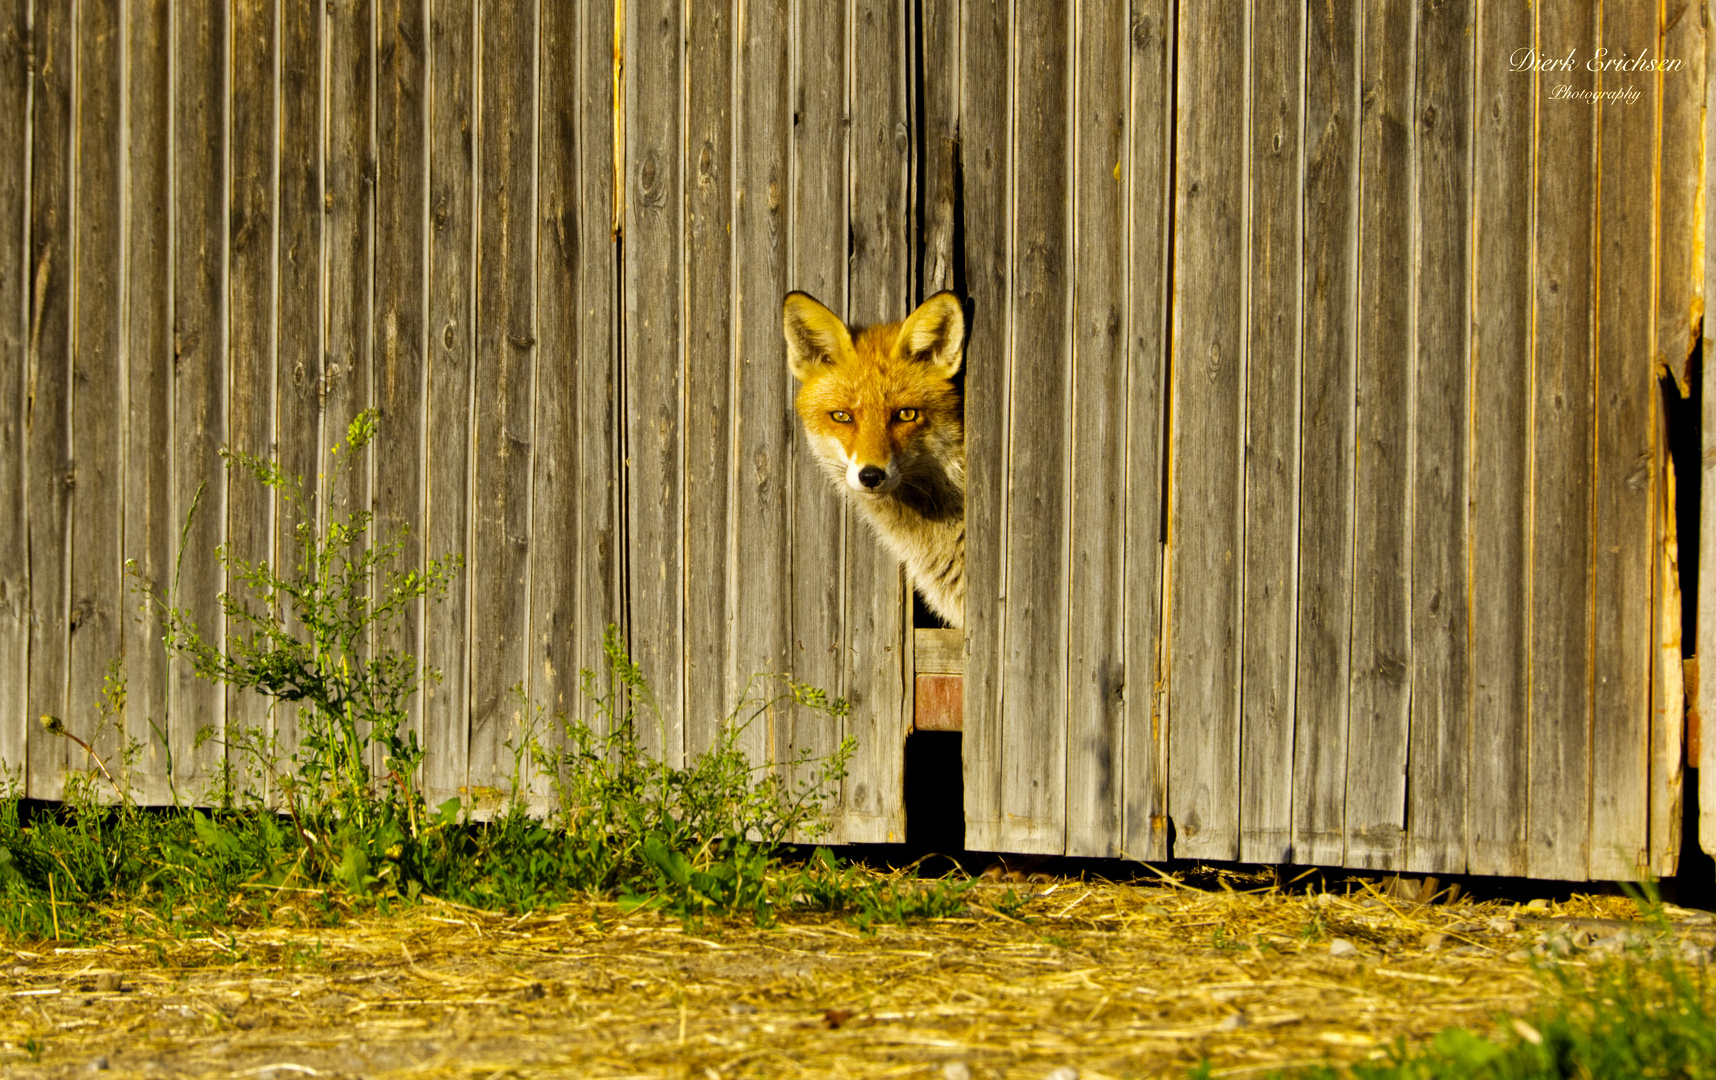 Fuchs am Morgen